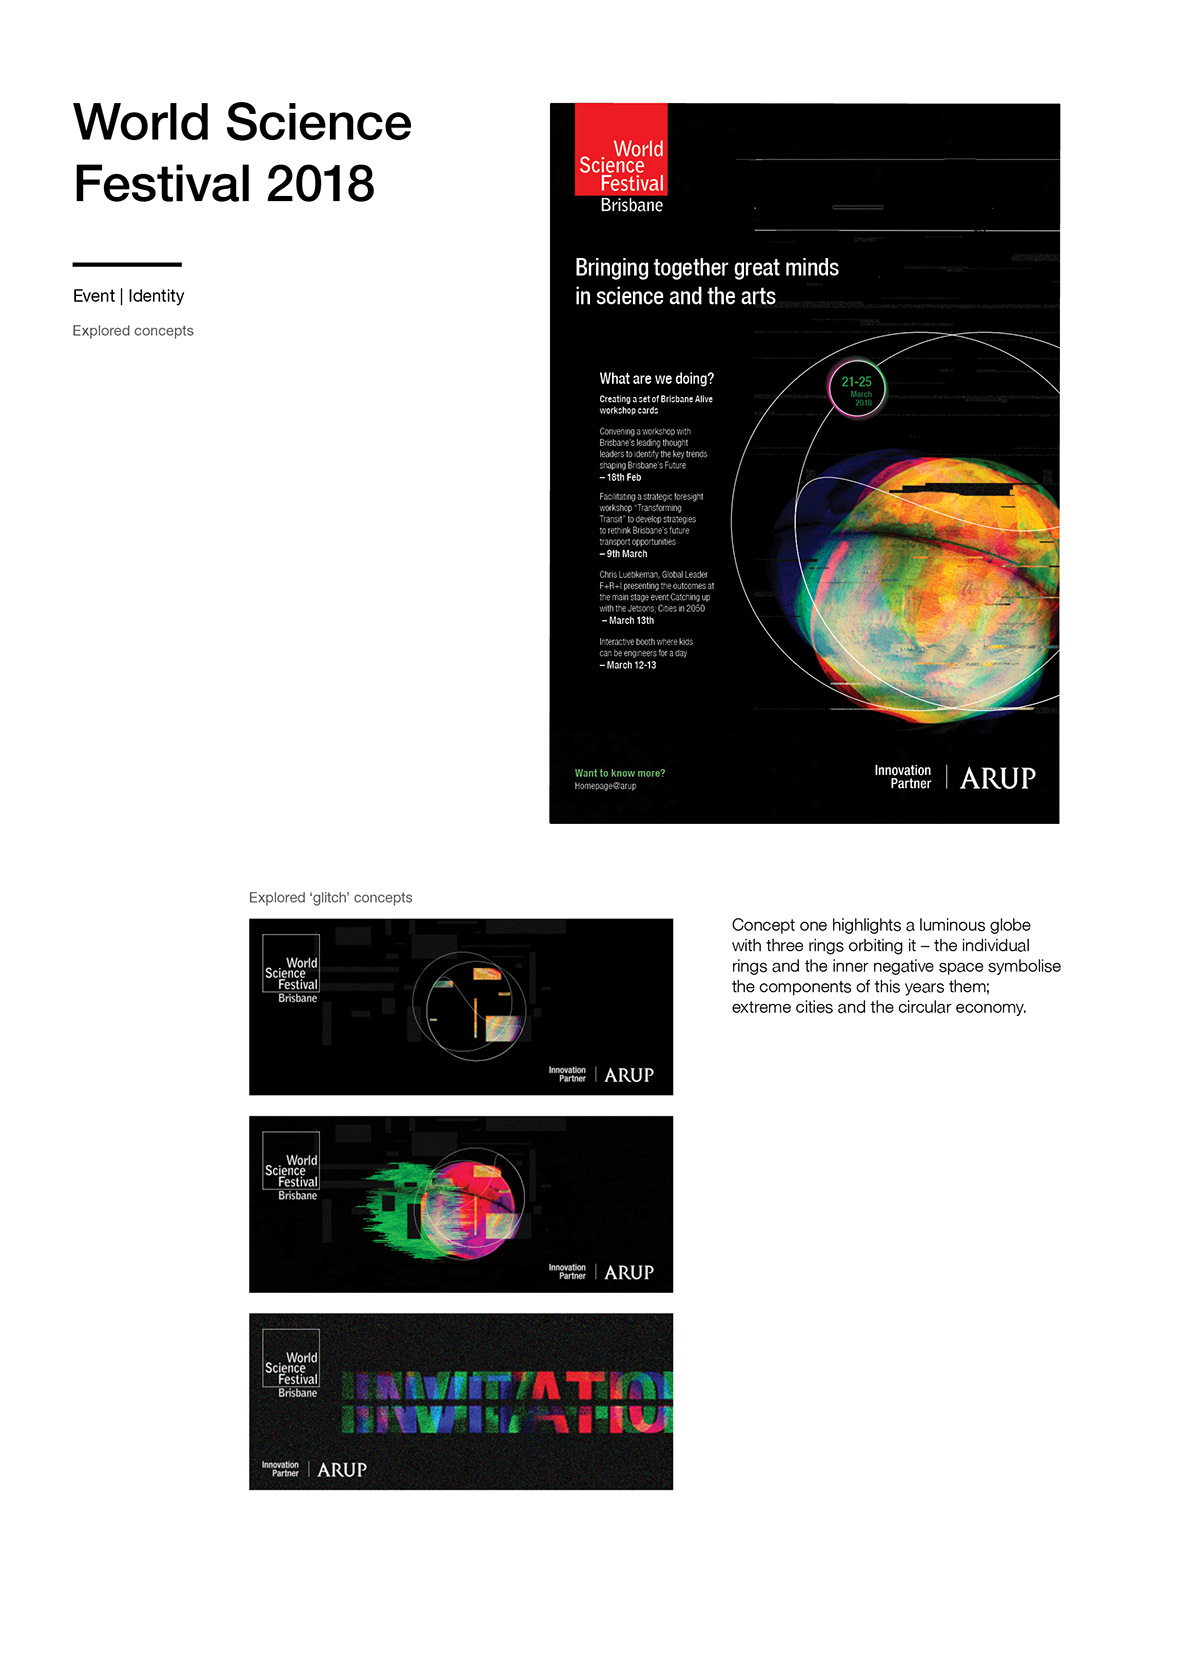 Corporate Design digital marketing corporate communications Layout report design infographic identity